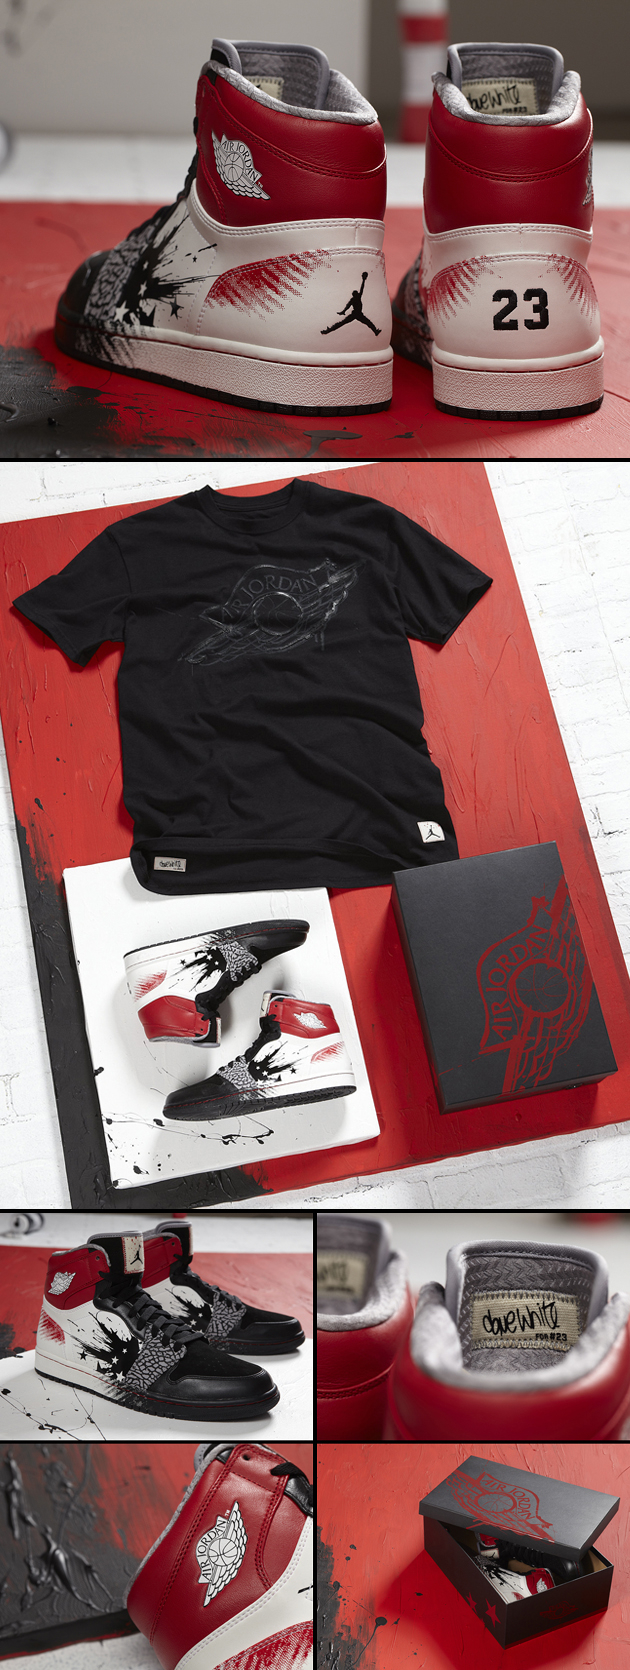 Dave White / Air Jordan 1 High DW - Jordan Brand Collaboration